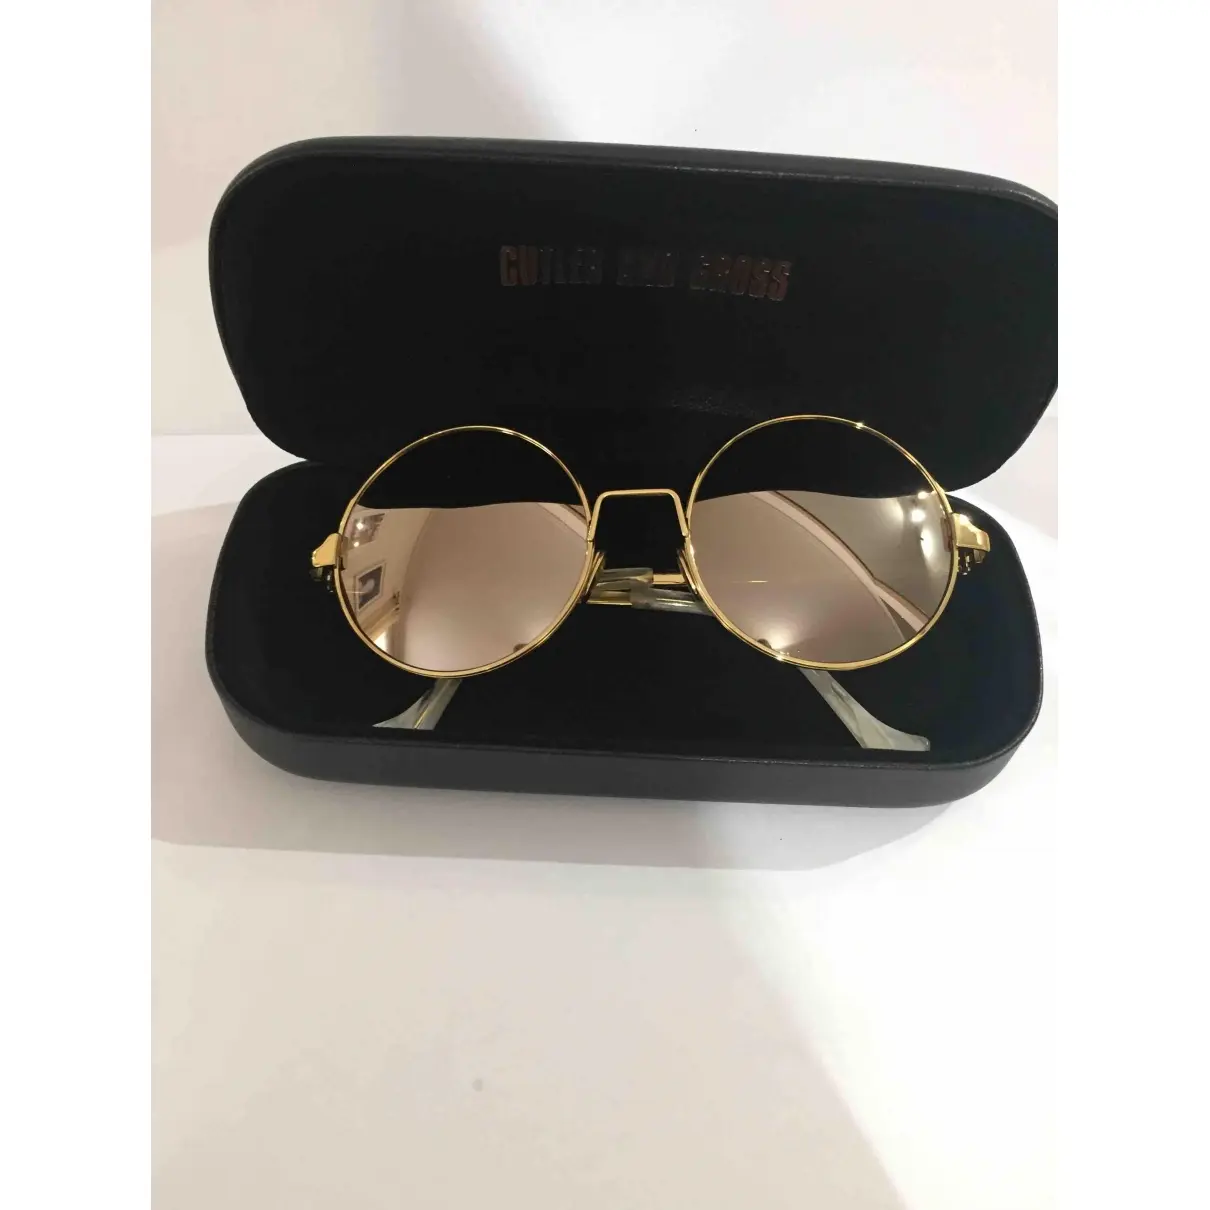 Buy Cutler & Gross Sunglasses online